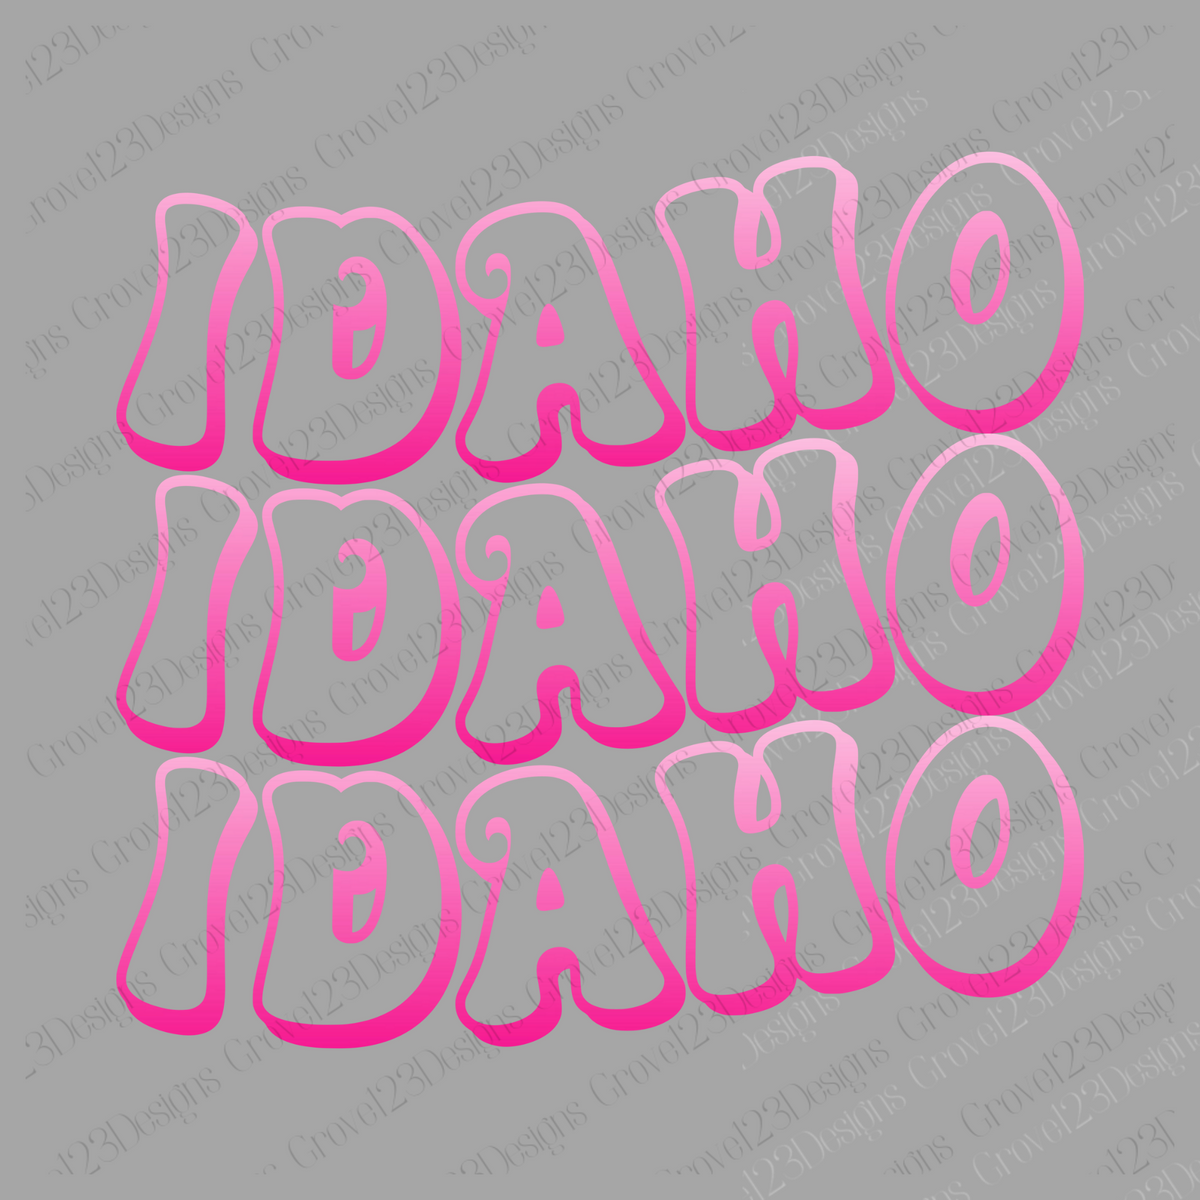 Idaho Retro Wavy Pink Ombre